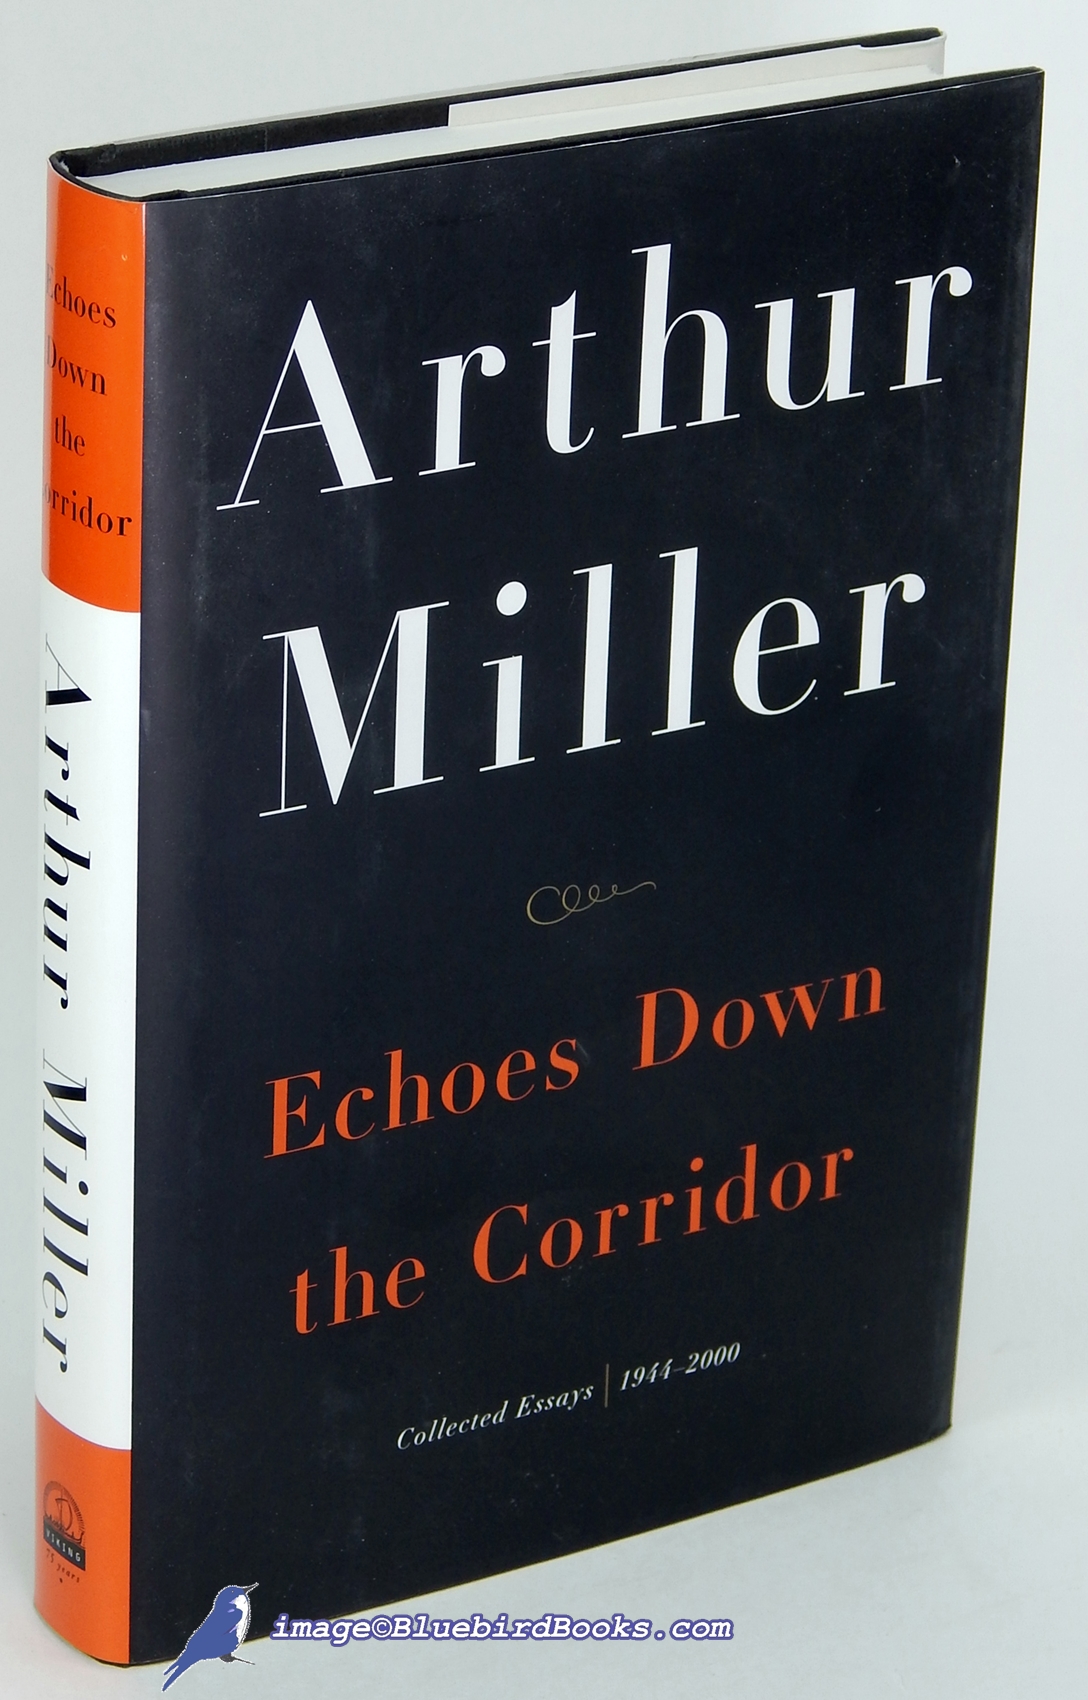 MILLER, ARTHUR (AUTHOR); CENTOLA, STEVEN R. (EDITOR) - Echoes Down the Corridor: Collected Essays, 1944-2000